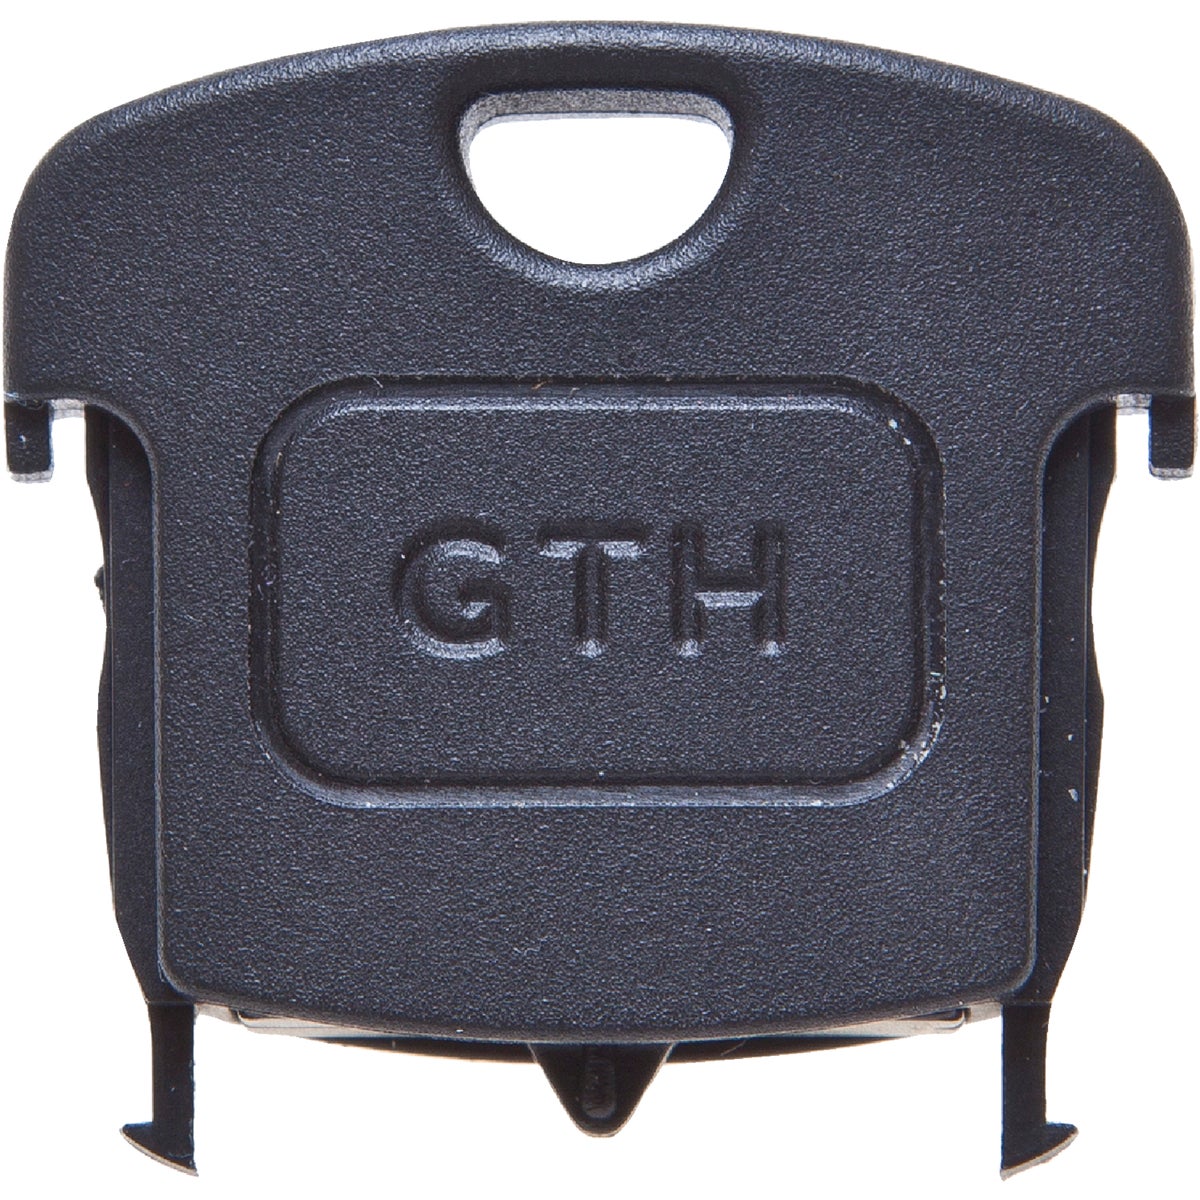 ILCO Electric Chip Key Head, GTH